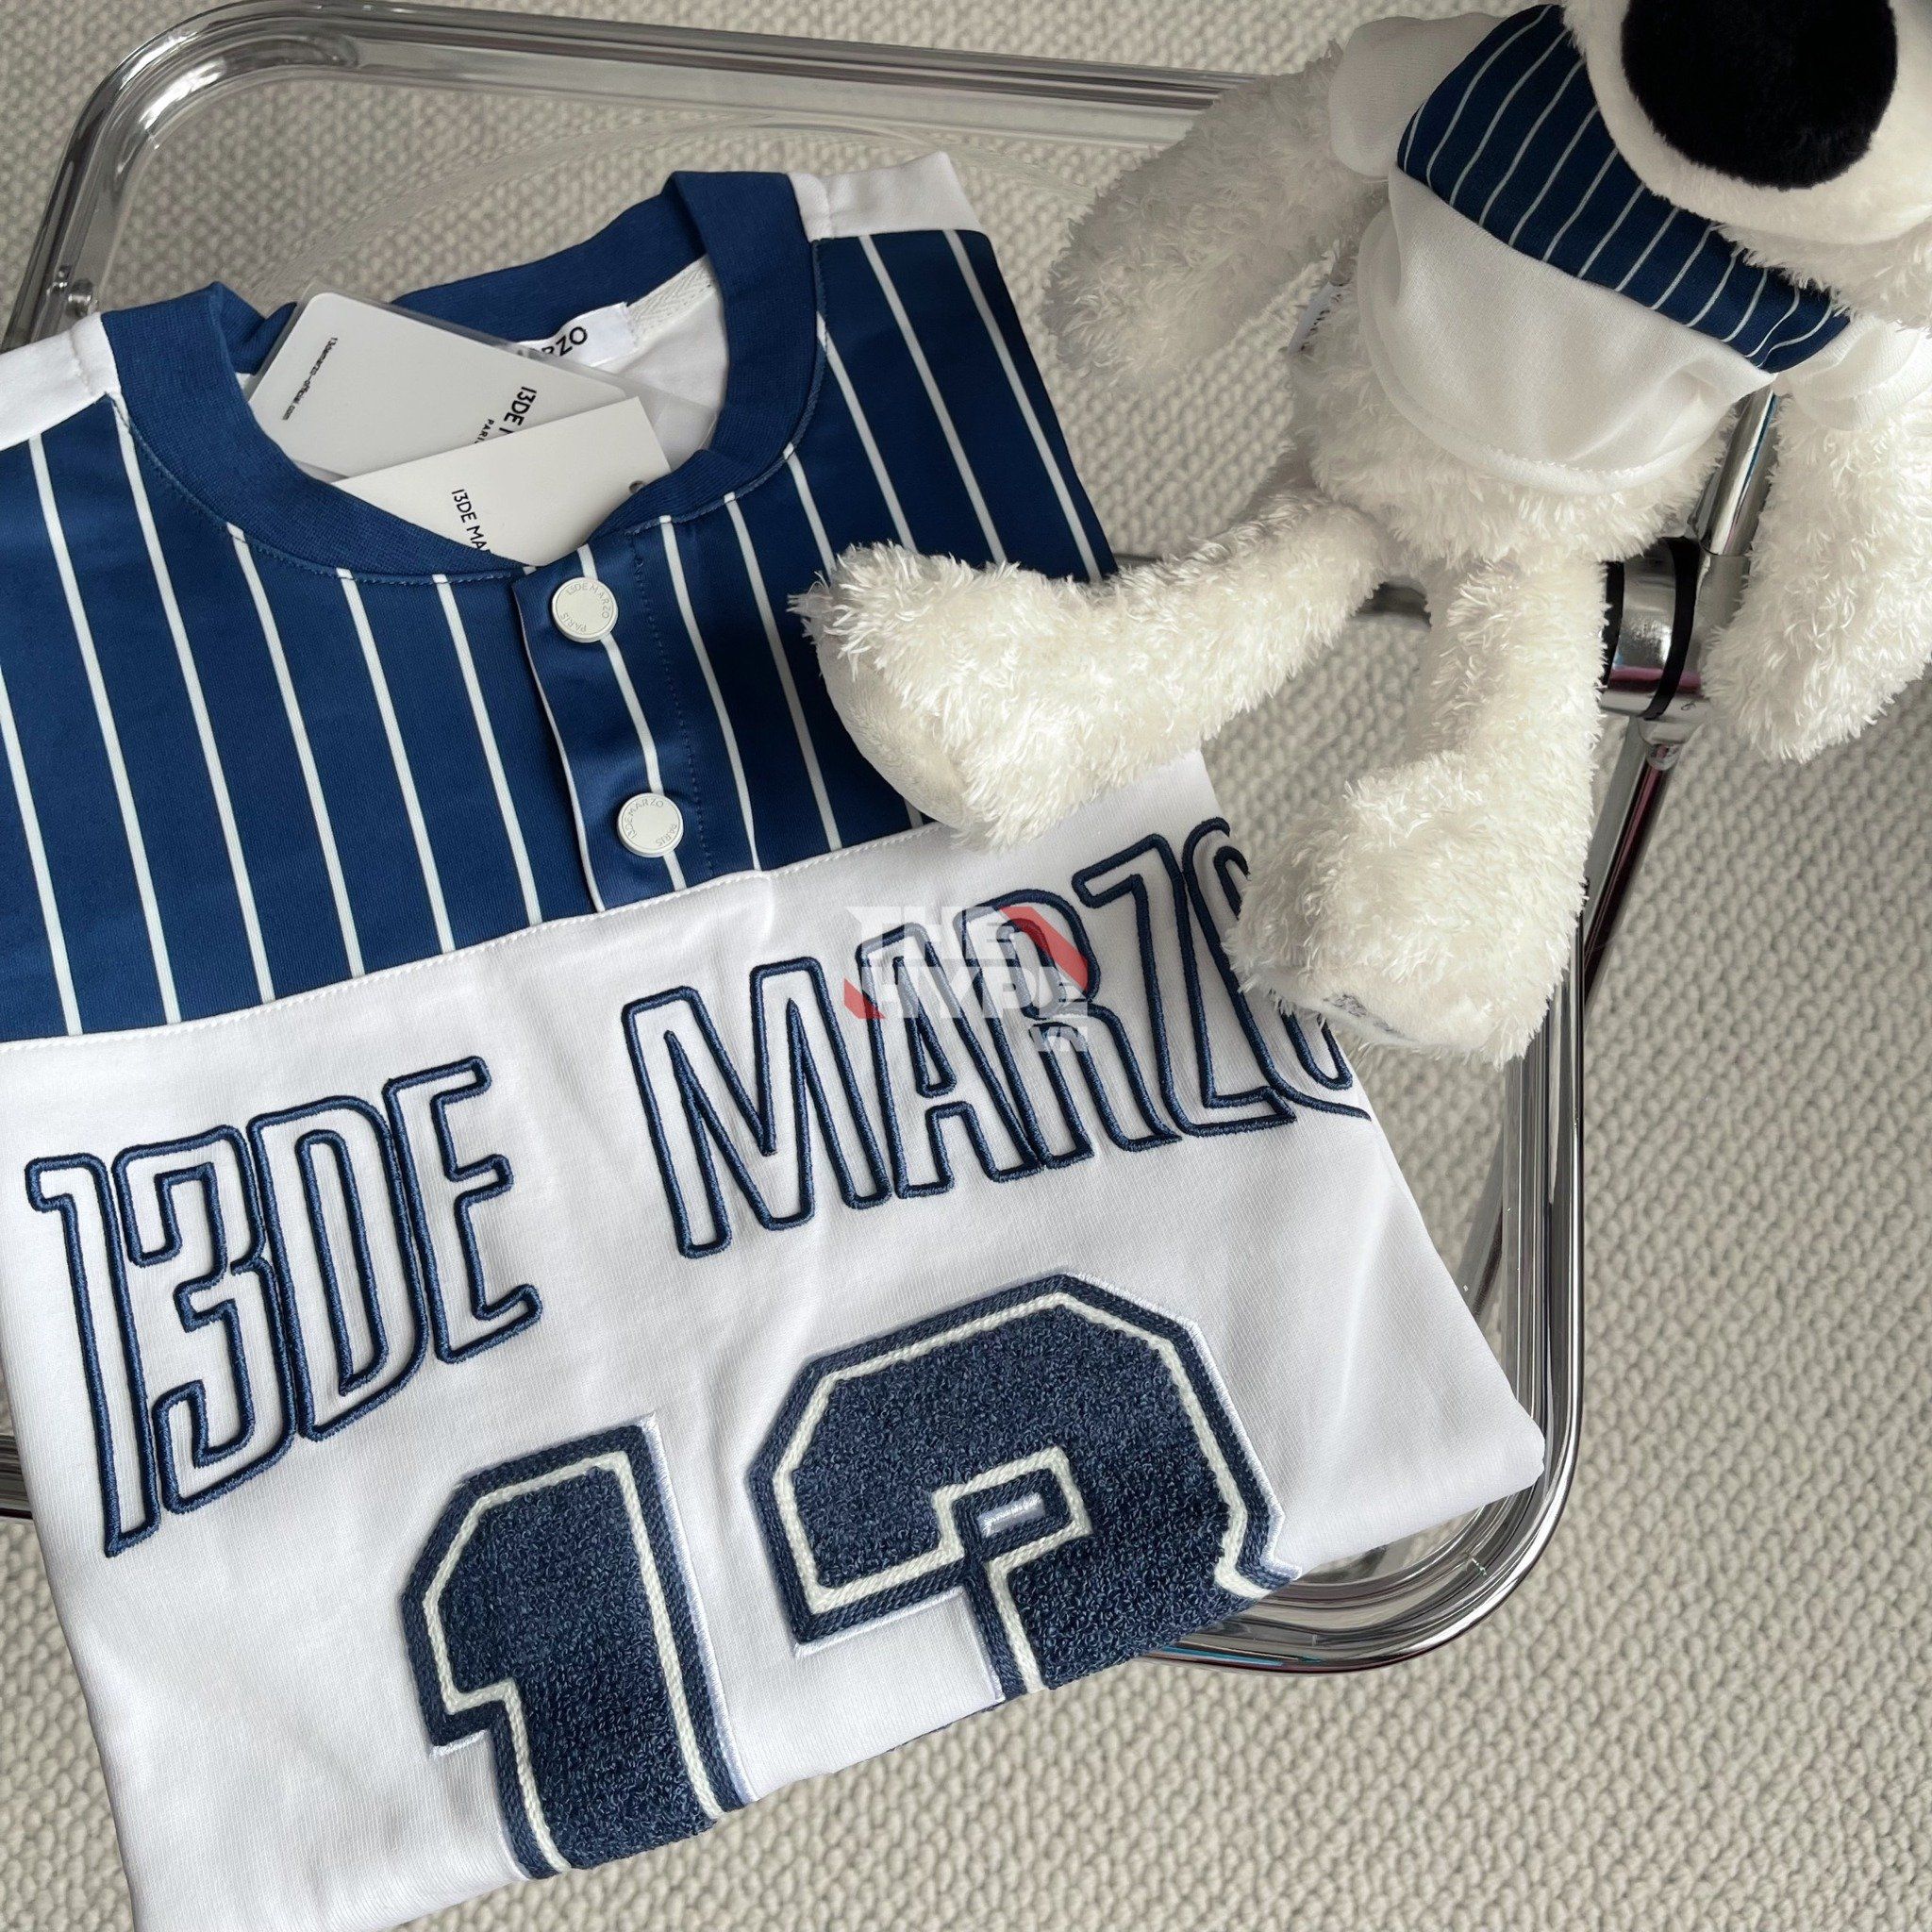  13DE MARZO TEE - Áo Thun Bear Baseball Fan (Bright White) [Mirror Quality] 